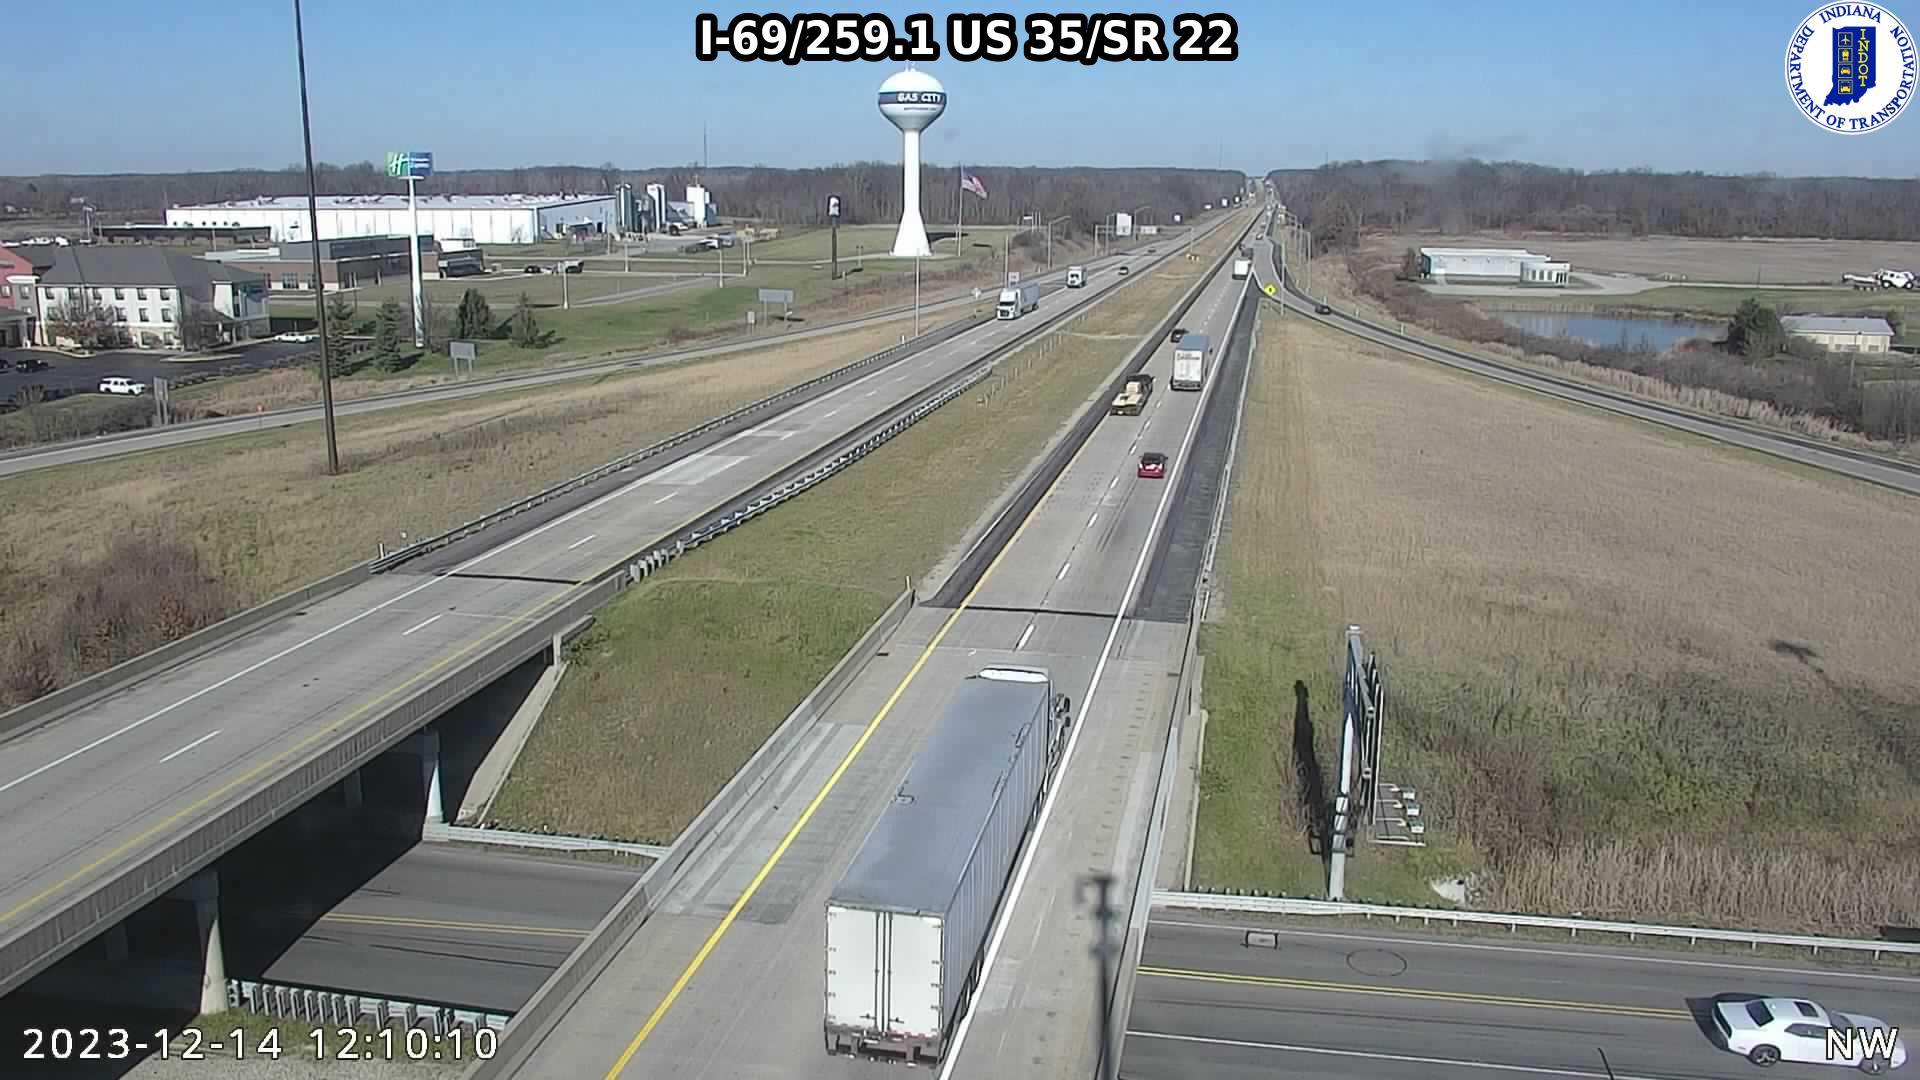 Traffic Cam Upland: I-69: I-69/259.1 US 35/SR Player